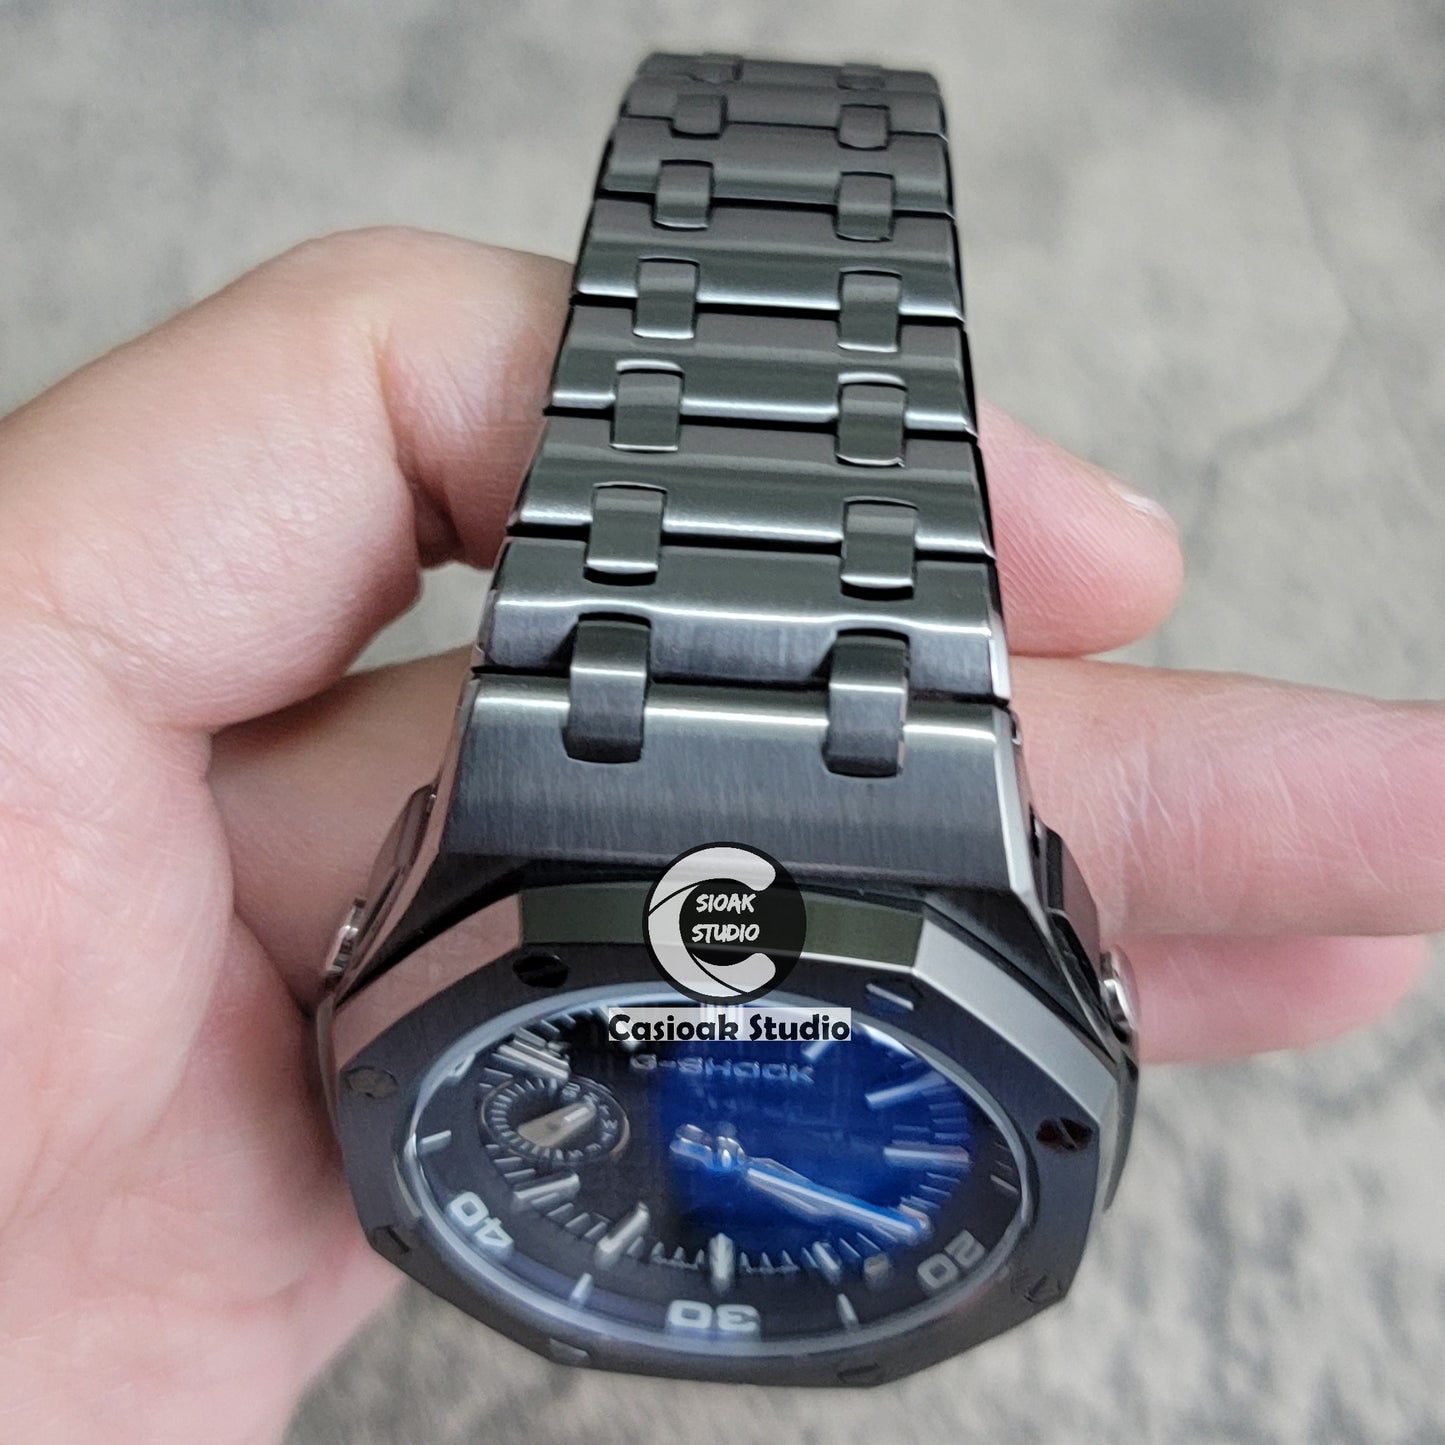 Casioak Mod Watch NEW Offshore Superior Gray Case Metal Strap Black Time Mark Black Dial 44mm Sapphire Crystal Sapphire Glass - Casioak Studio